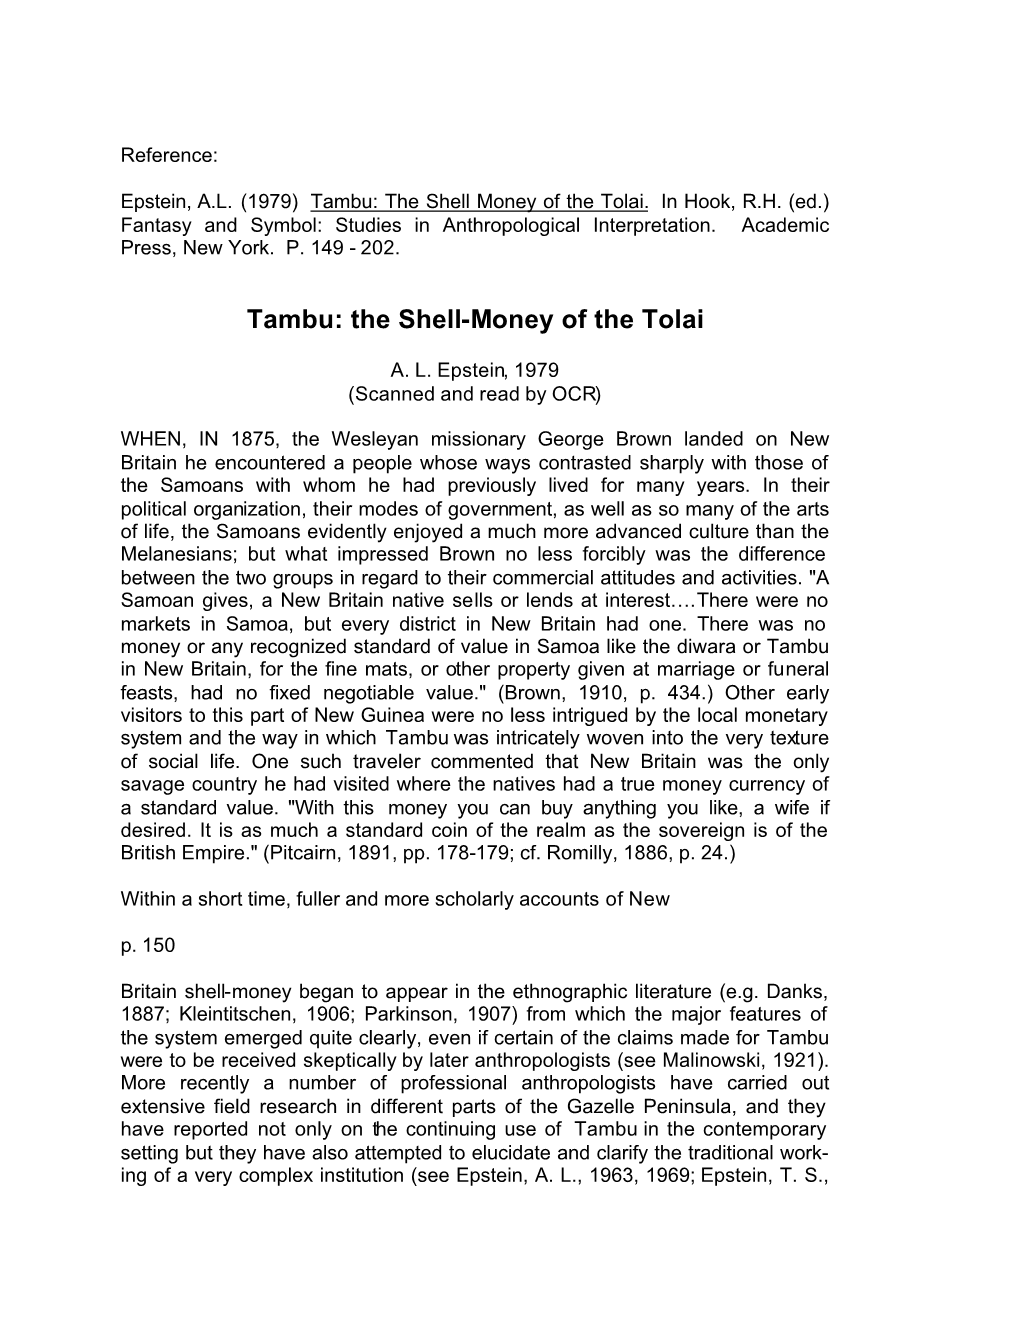 Tambu: the Shell-Money of the Tolai